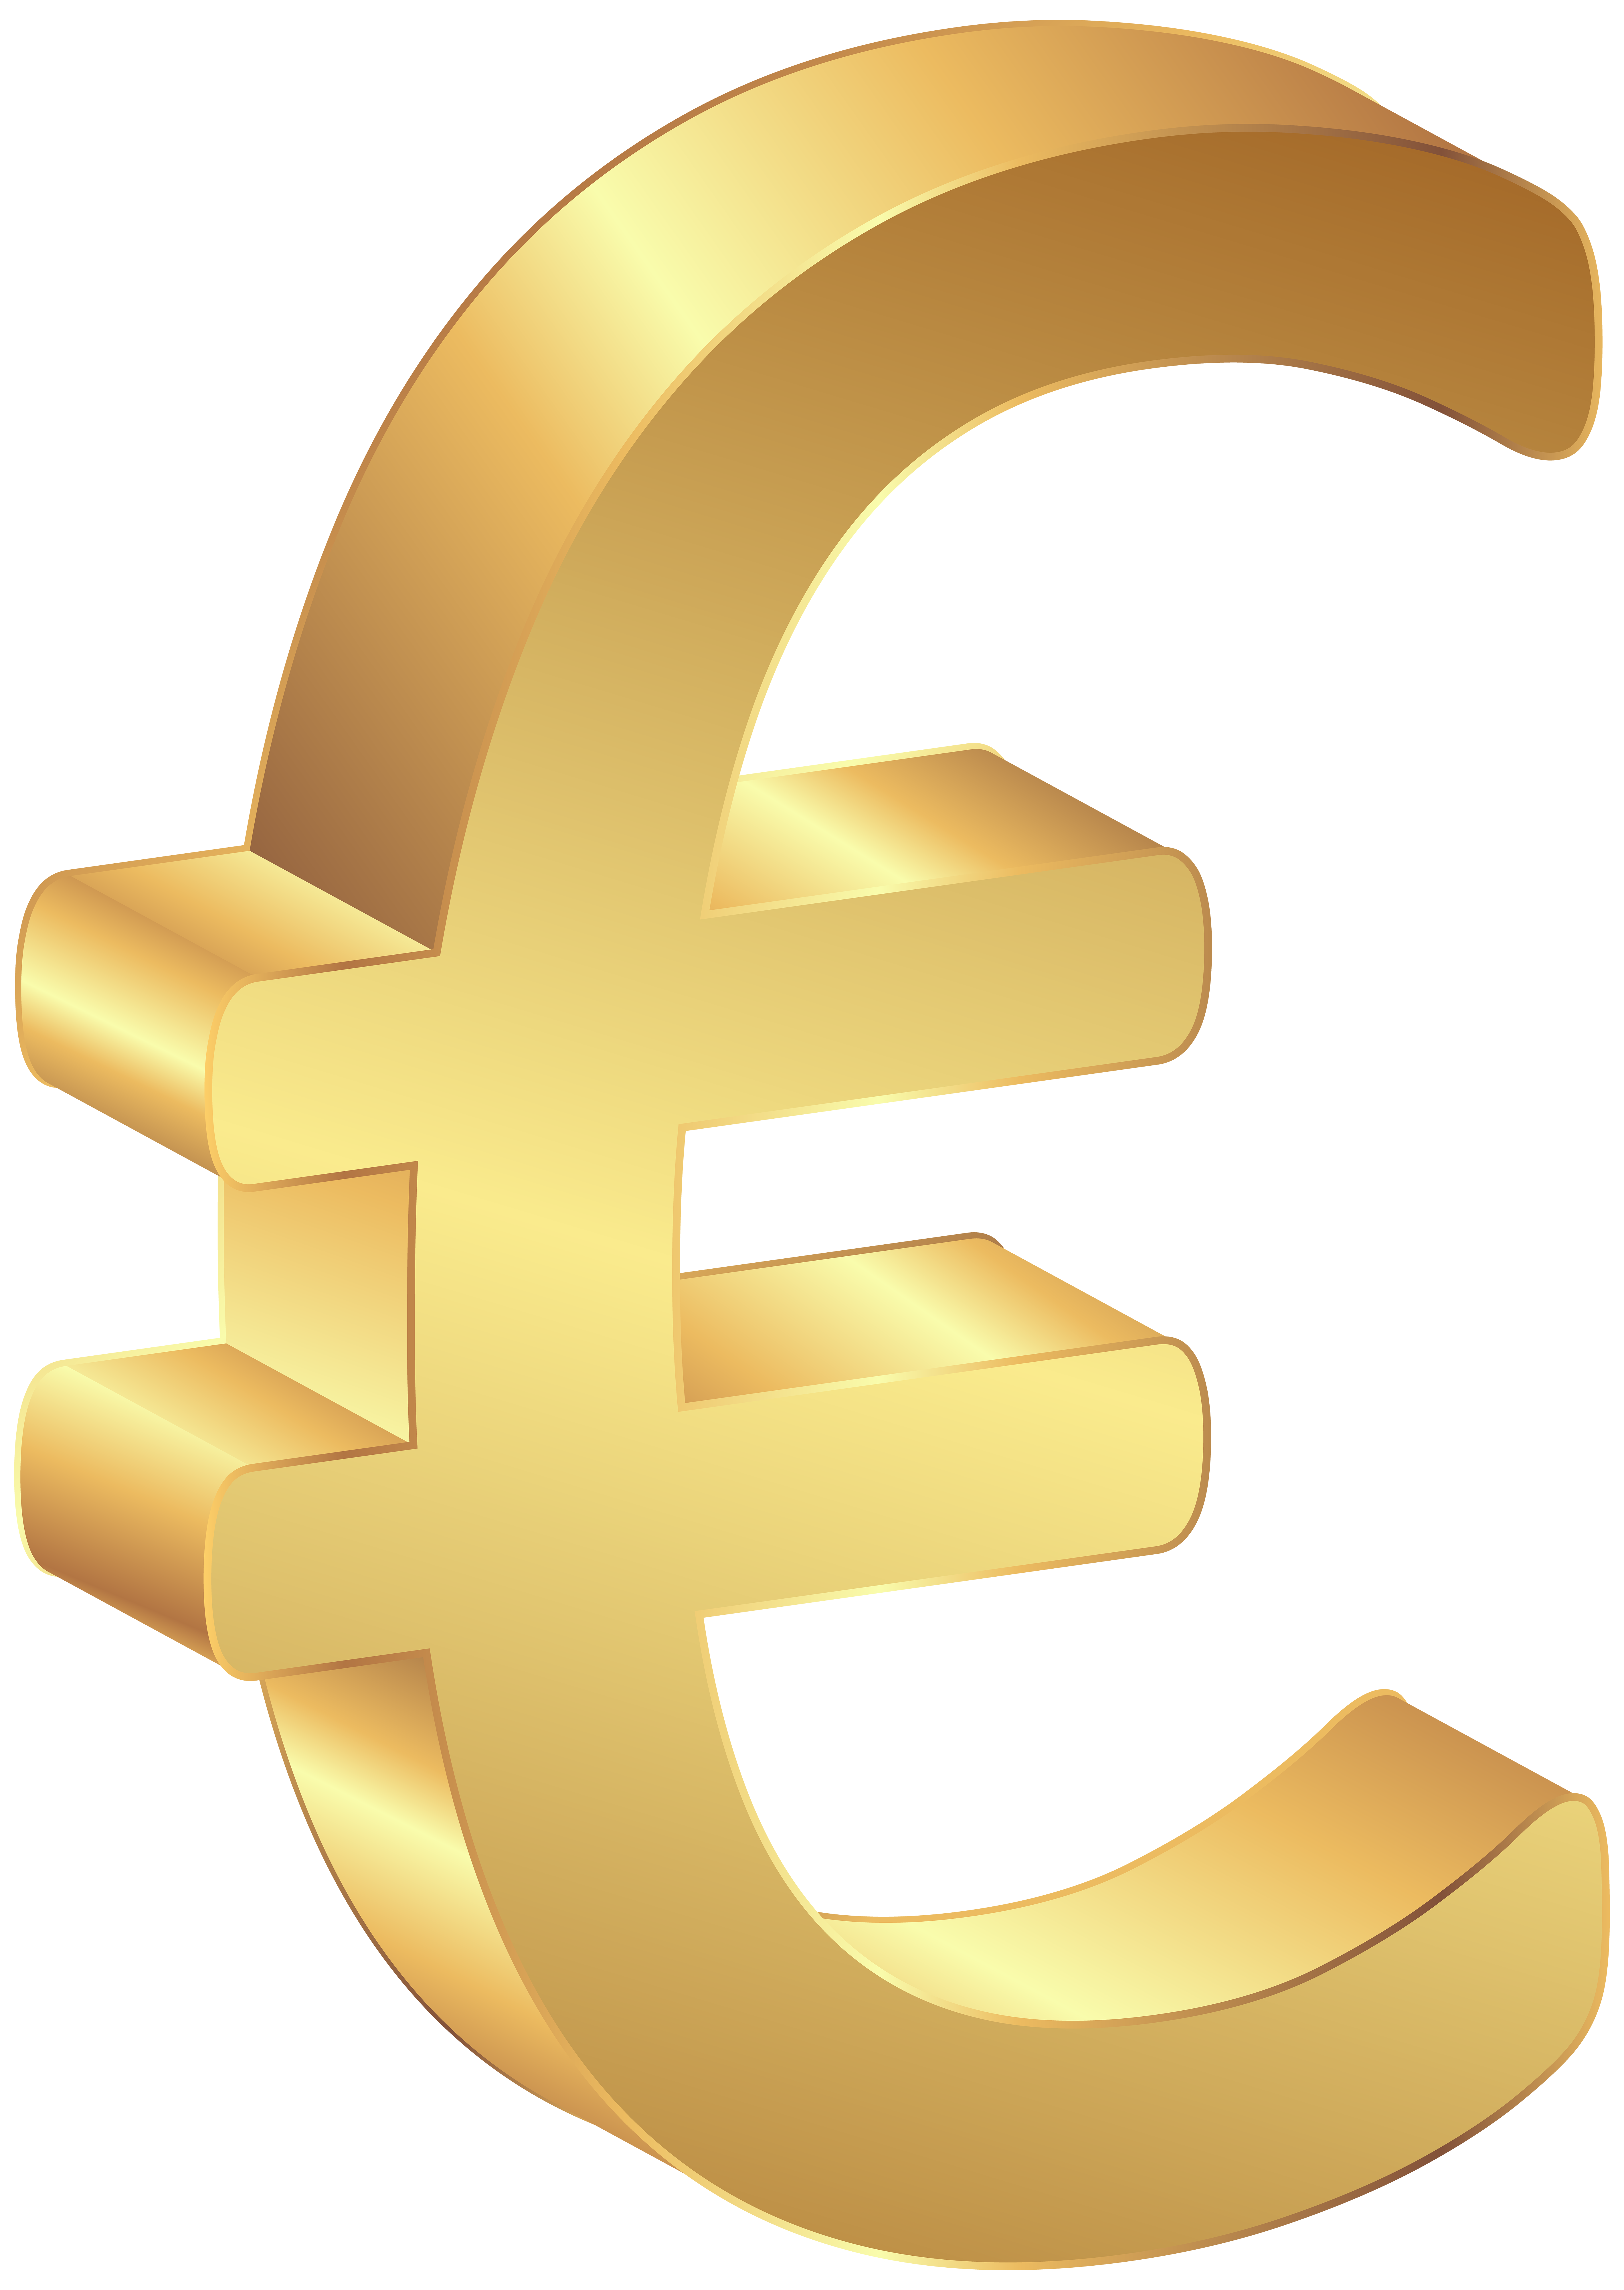 Euro currency. Знак евро. Евро логотип. Евро знак валюты.